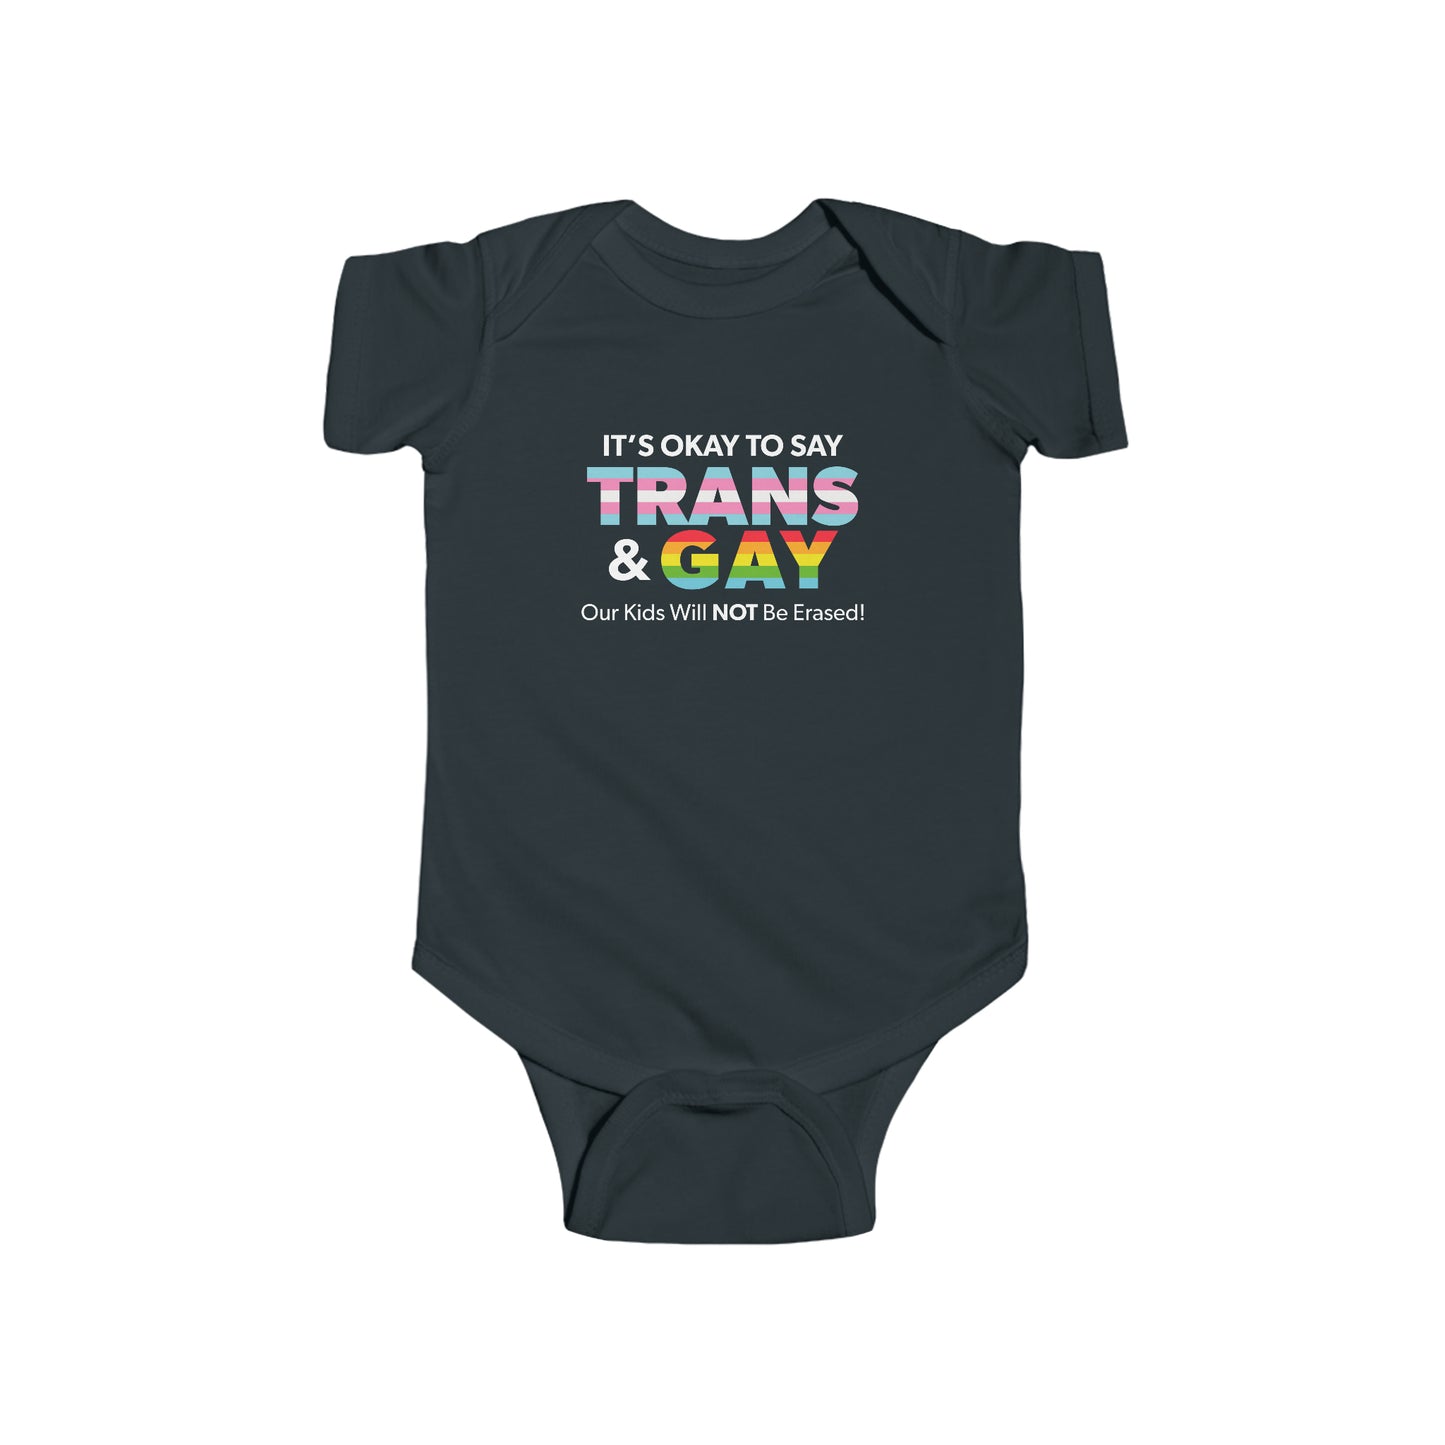 "It’s Okay to Say Trans & Gay" Infant Onesie